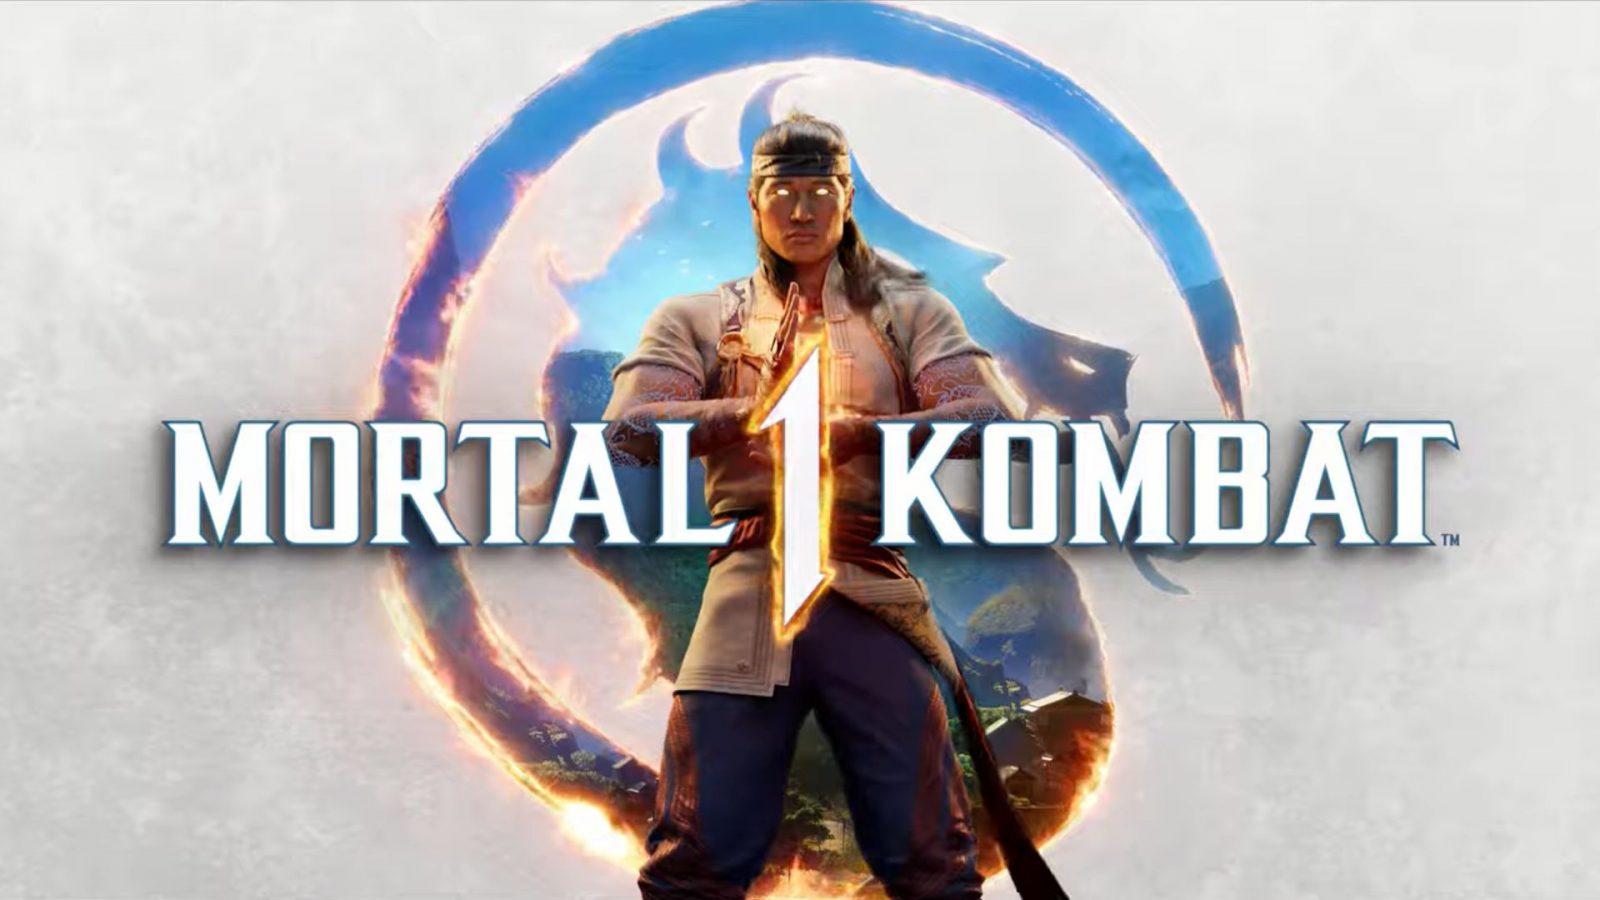 Mortal Kombat Legends: Cage Match Release Date Revealed in New Trailer